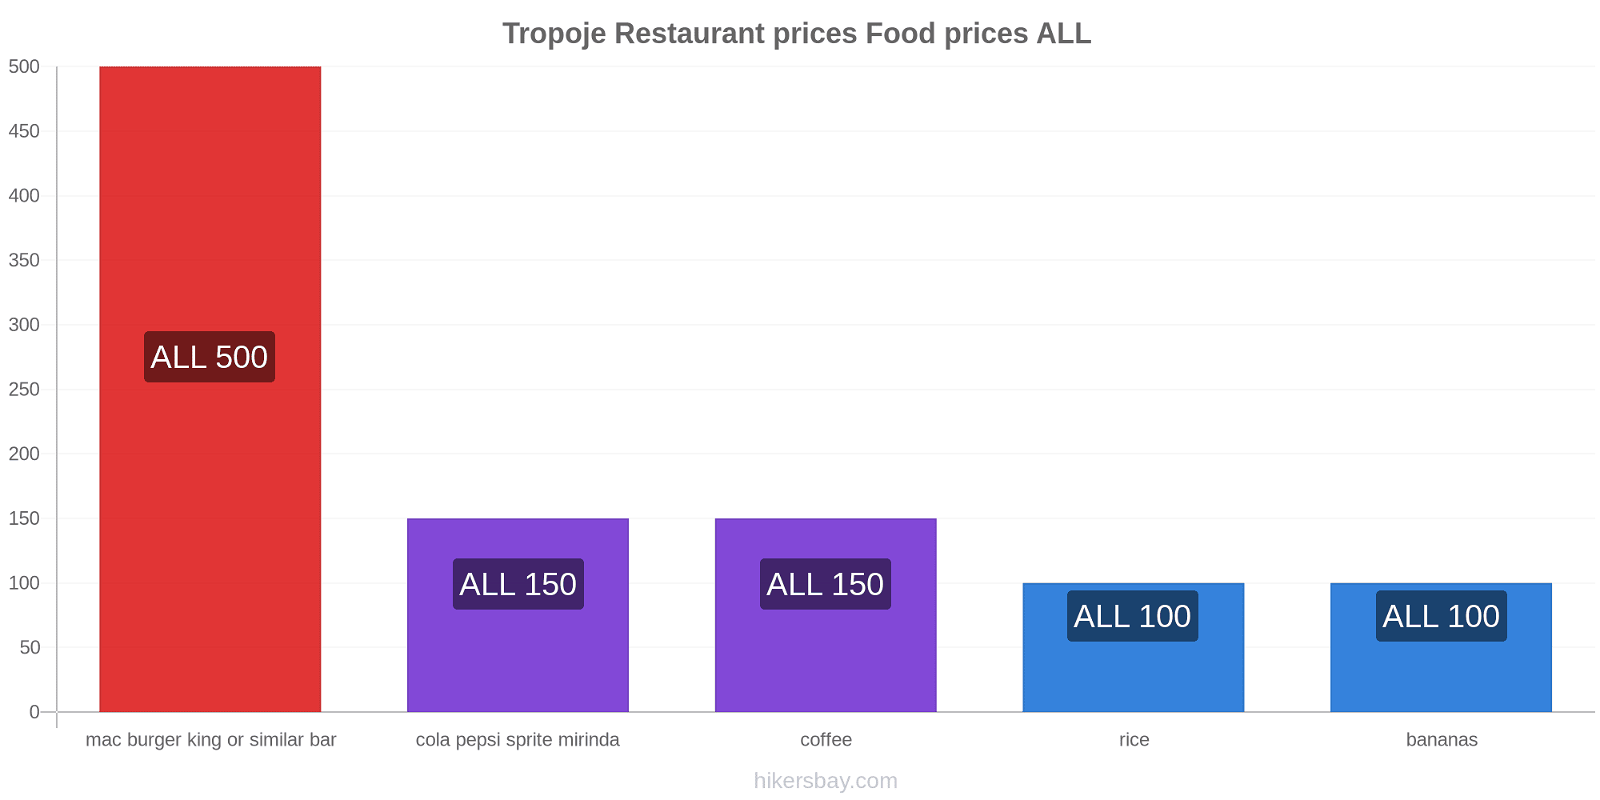 Tropoje price changes hikersbay.com